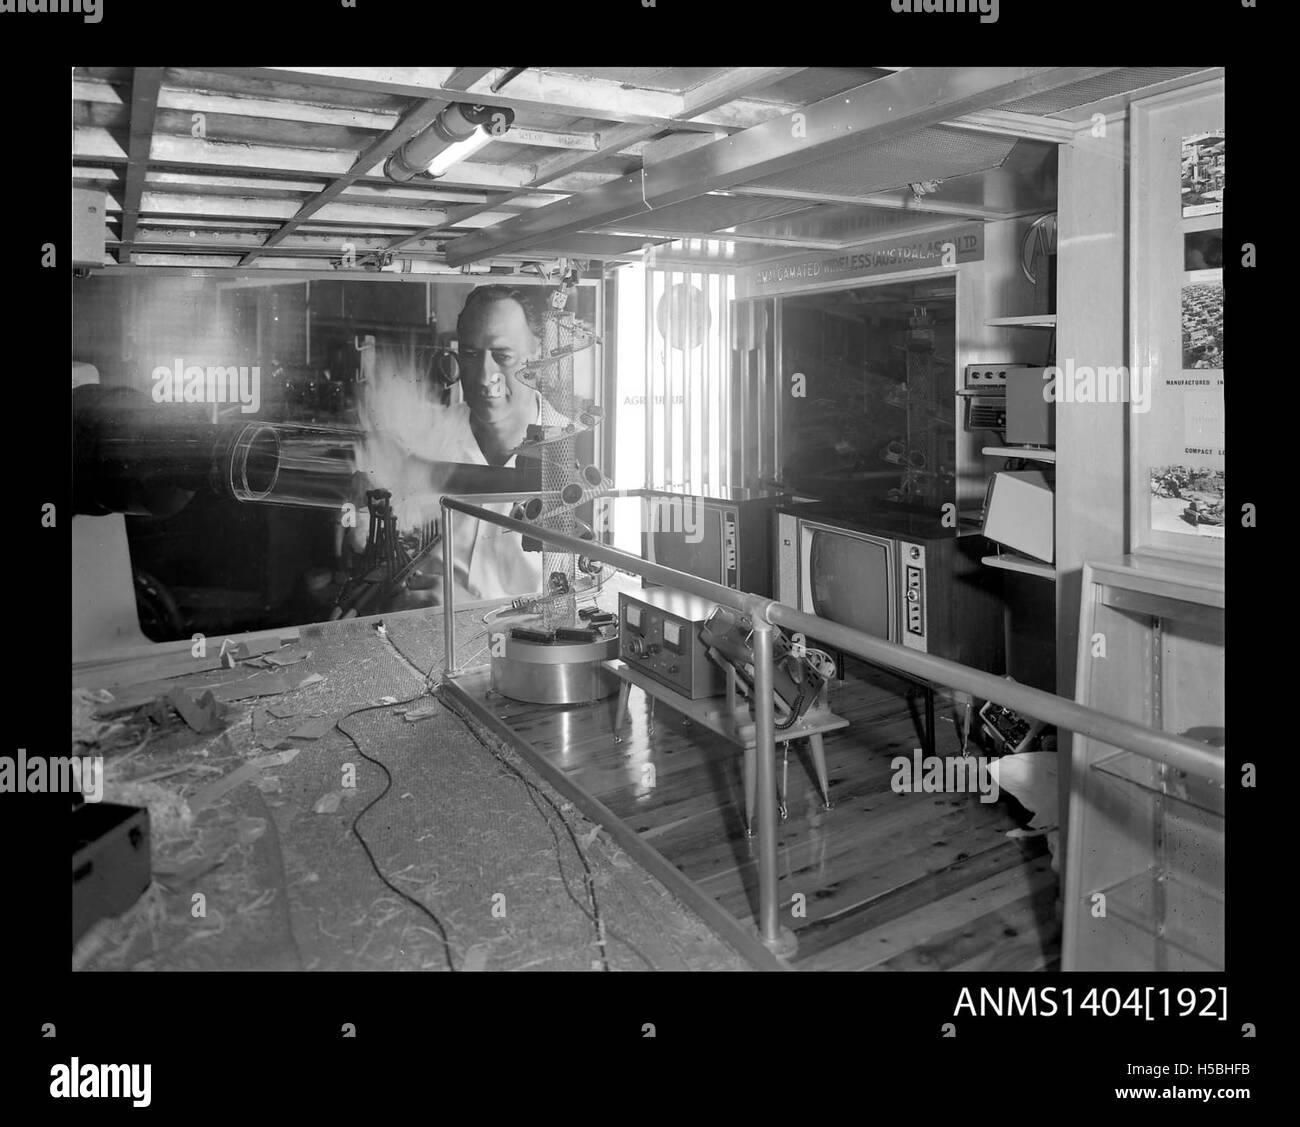 1 Set up of an AWA company display on board a trade ship Stock Photo